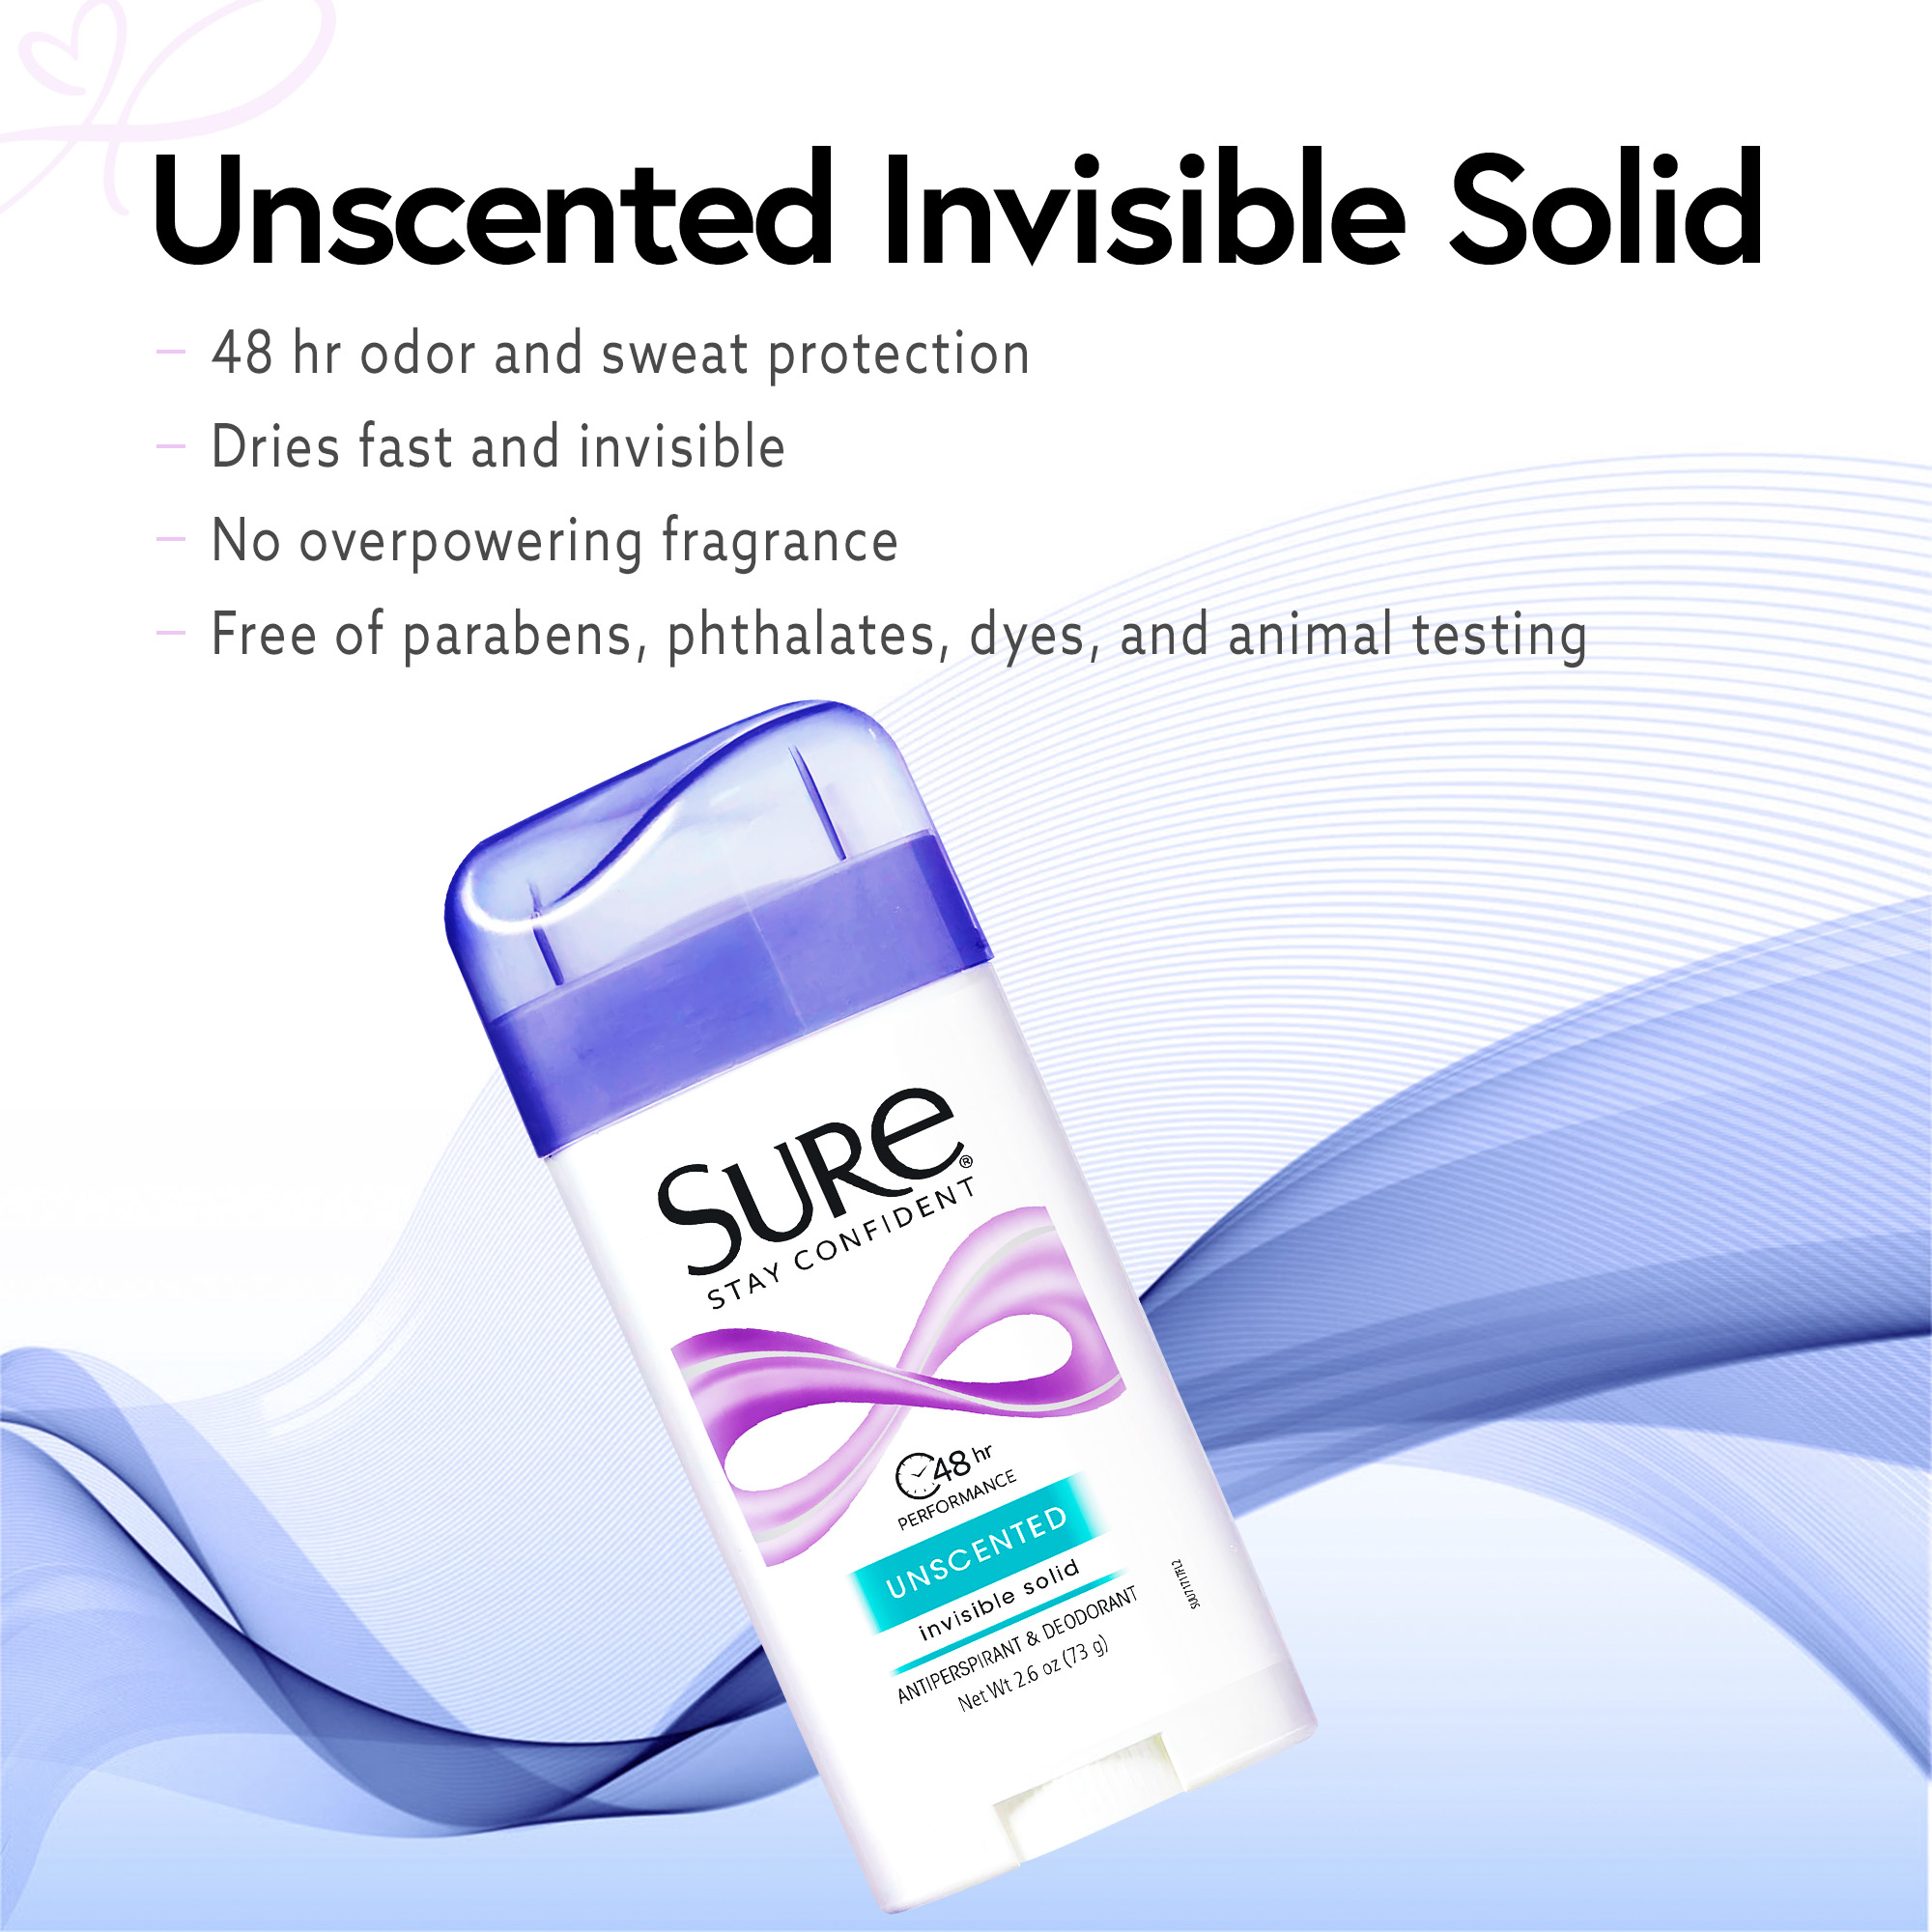 Sure Solid Anti-Perspirant Deodorant Stick, Unscented, 2.6 oz - image 2 of 5